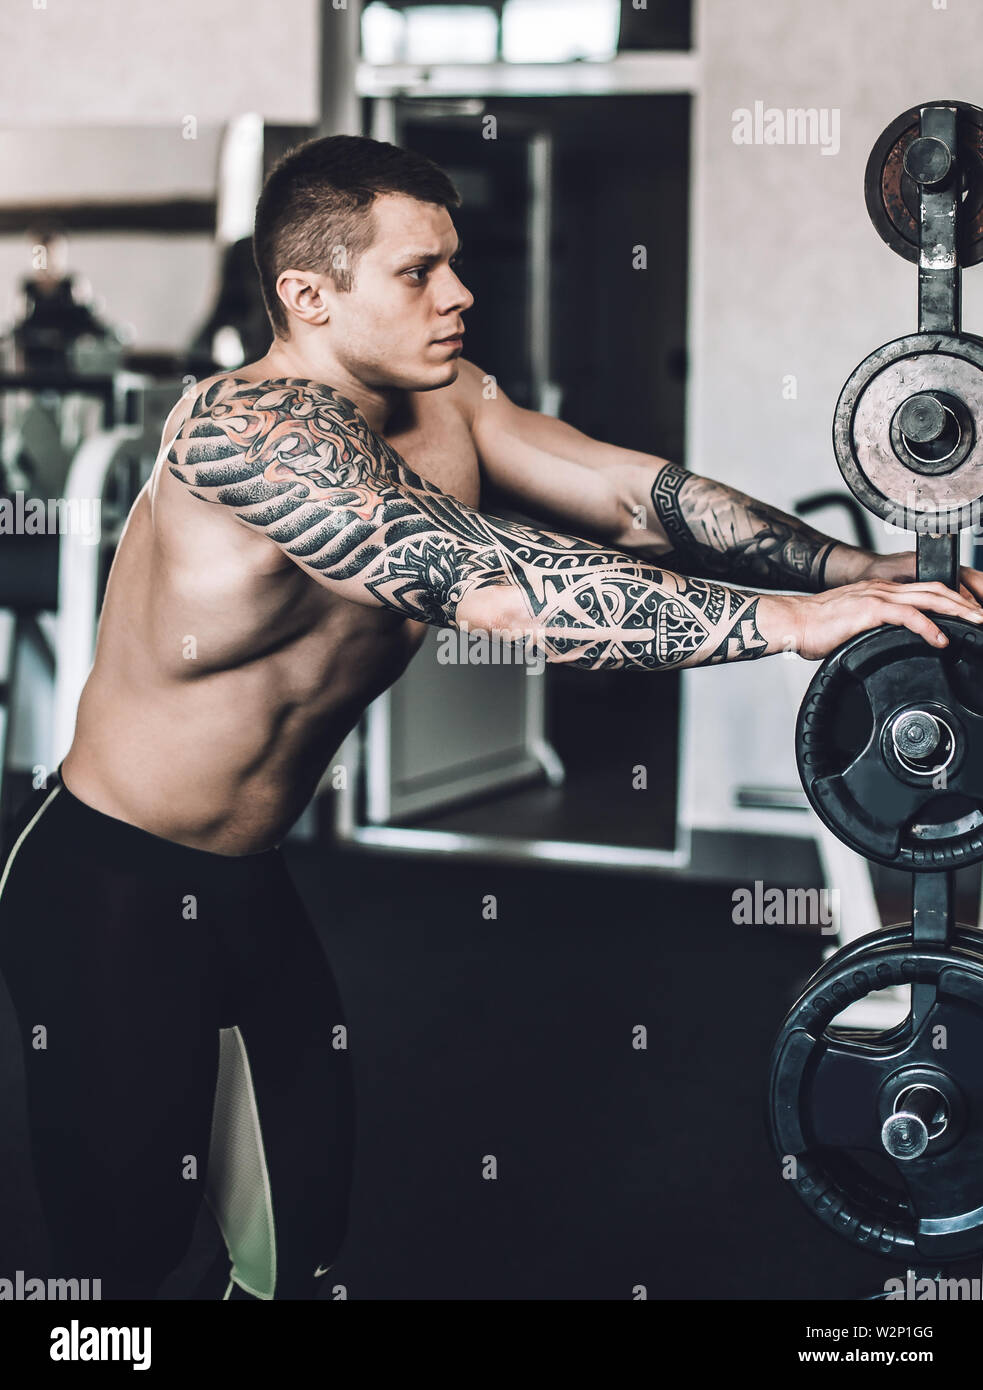 Download wallpaper damn muscle muscle tattoo men workout fitness  gym abs bodybuilder Lazar Angelov Lazar Angelov section sports in  resolution 640x960